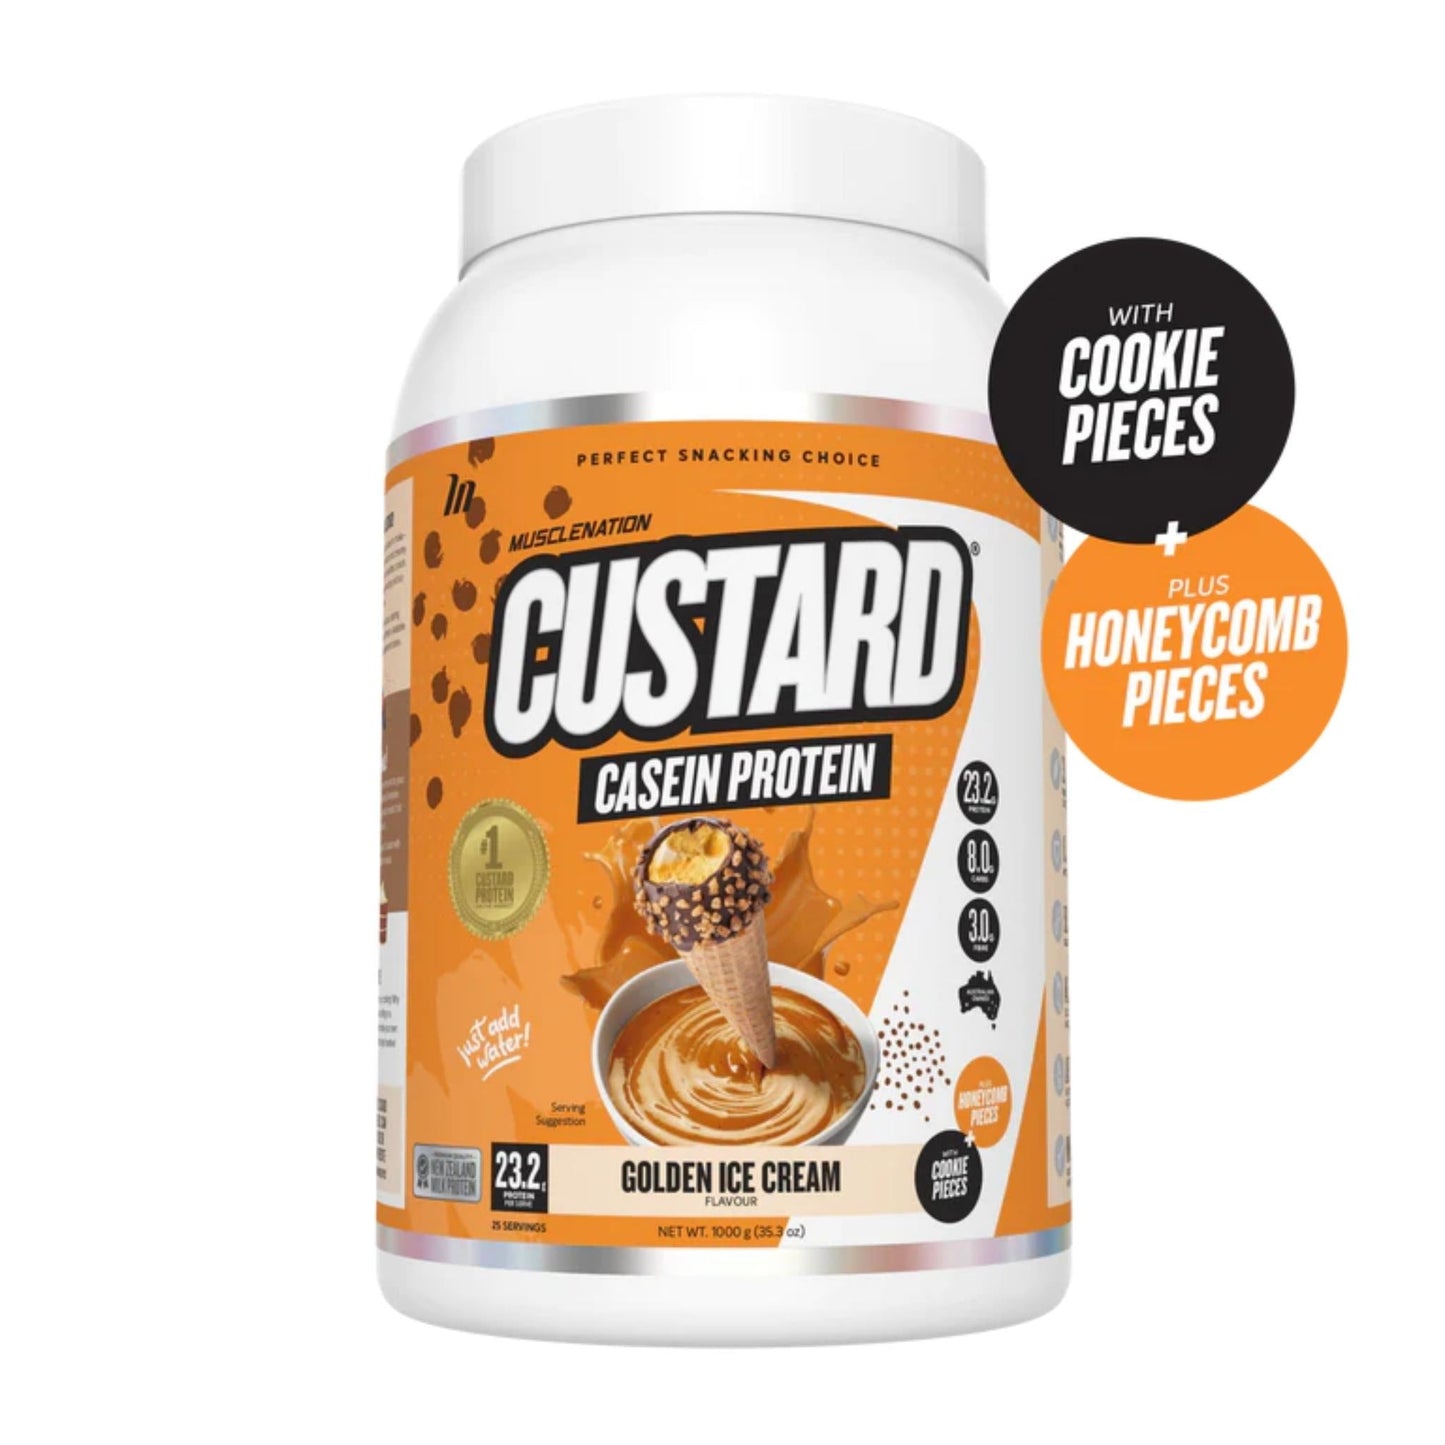 Muscle Nation - Custard Casein Protein - Supplements - Golden Ice Cream - The Cave Gym